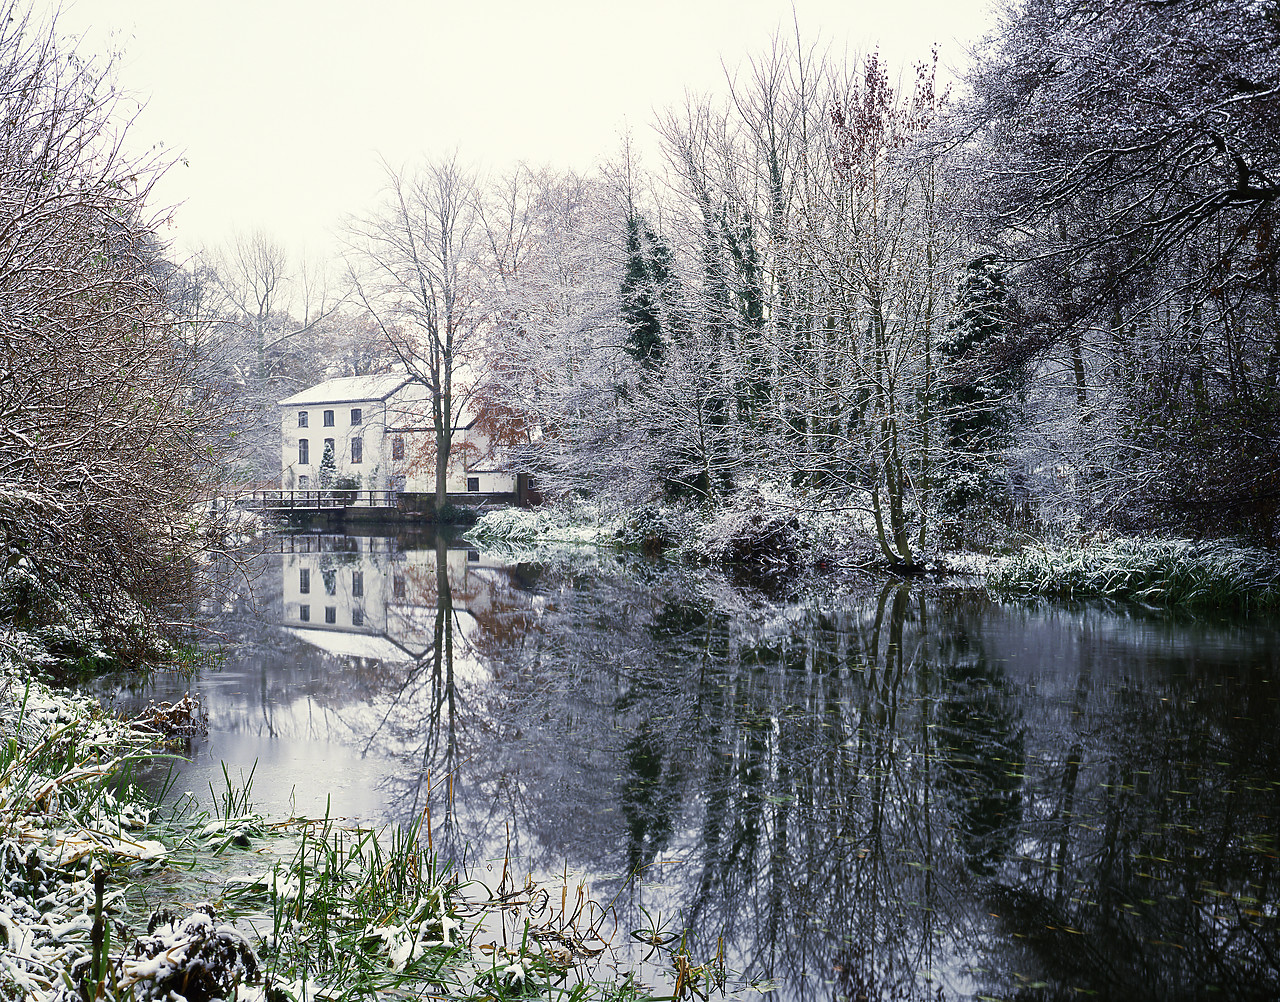 #85606-1 - Cringleford Mill in Winter, Cringleford, Norfolk, England